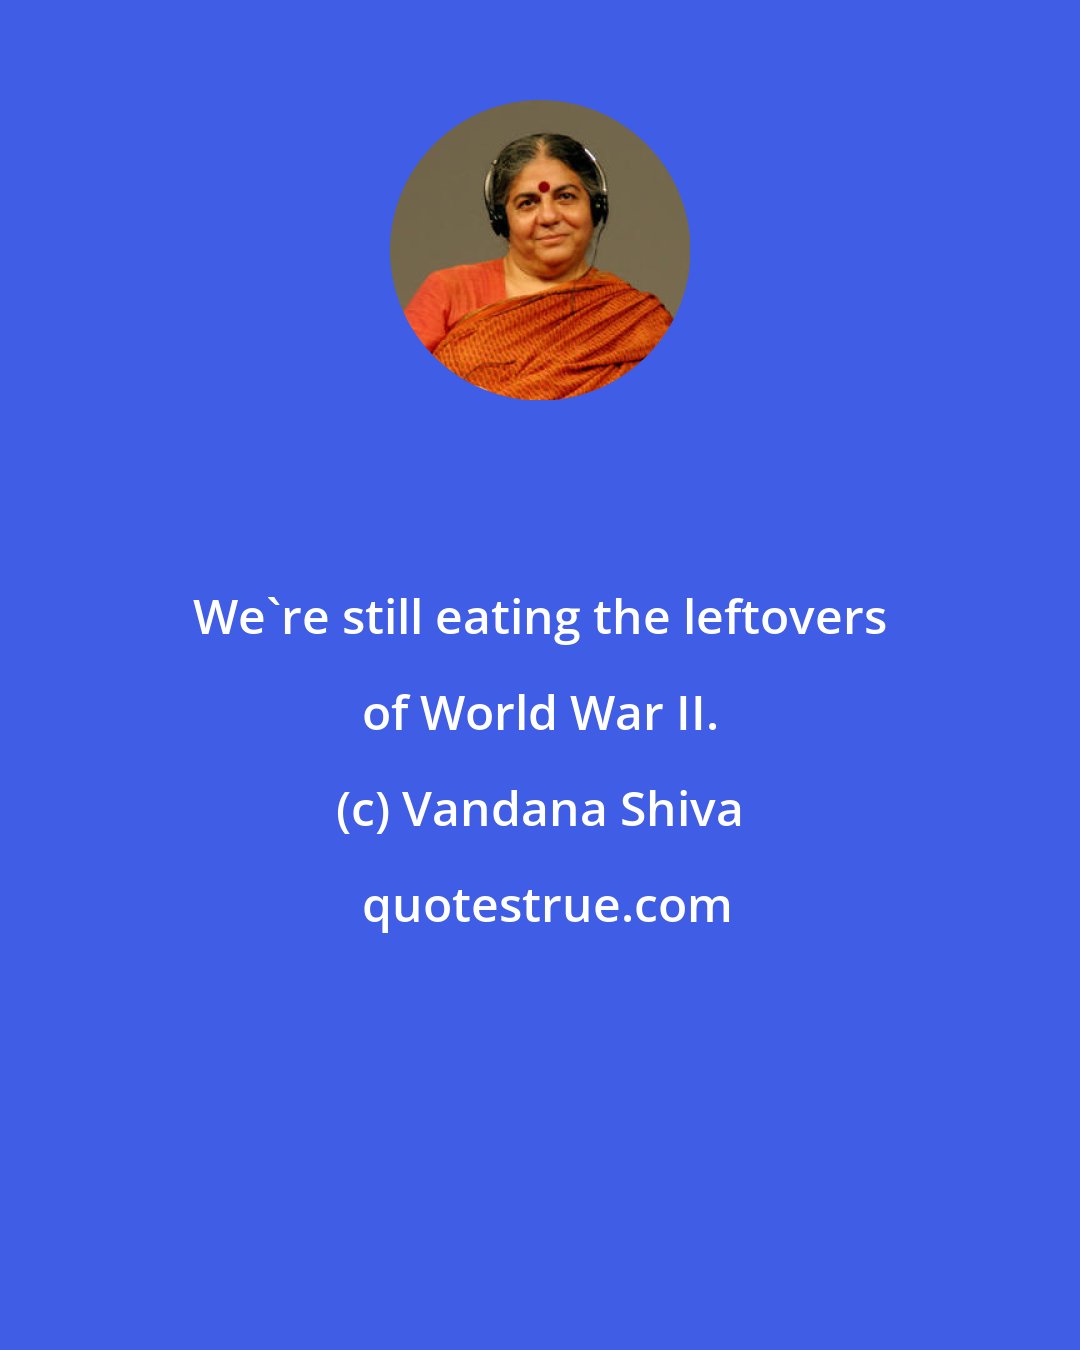 Vandana Shiva: We're still eating the leftovers of World War II.